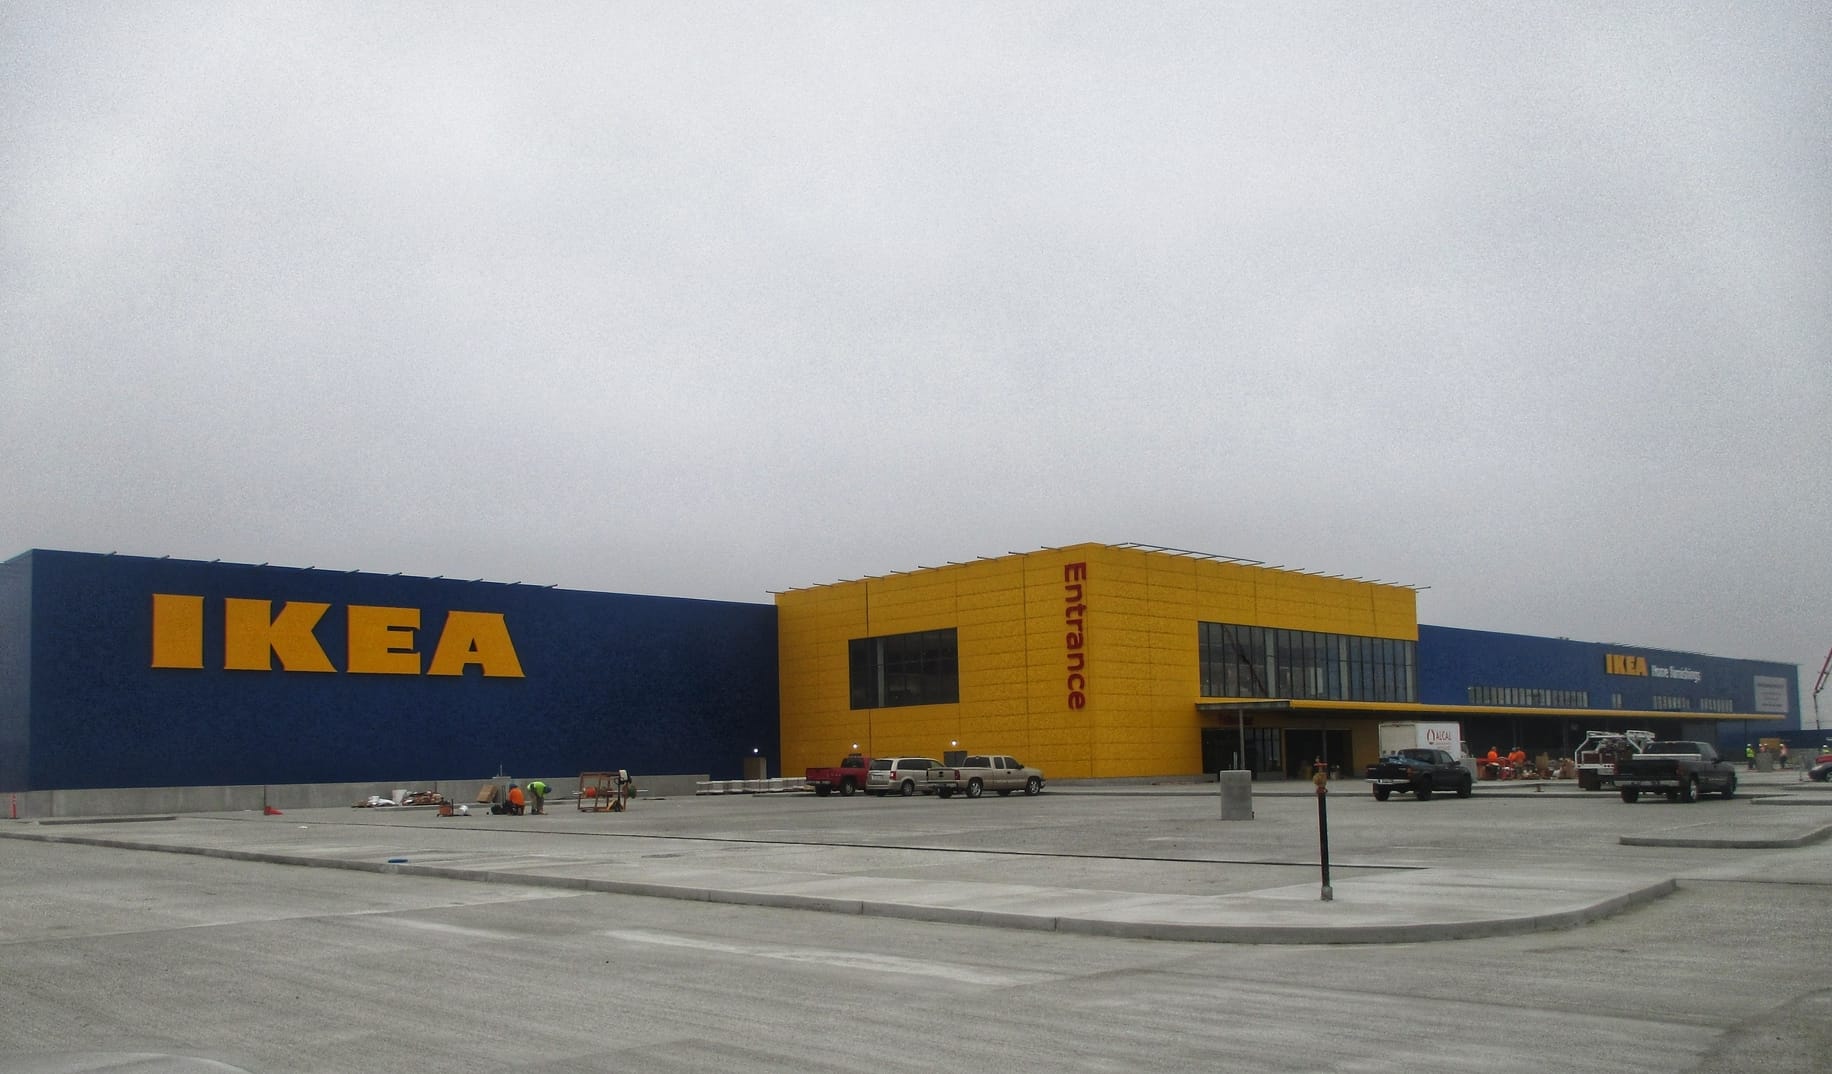 Burbank California IKEA